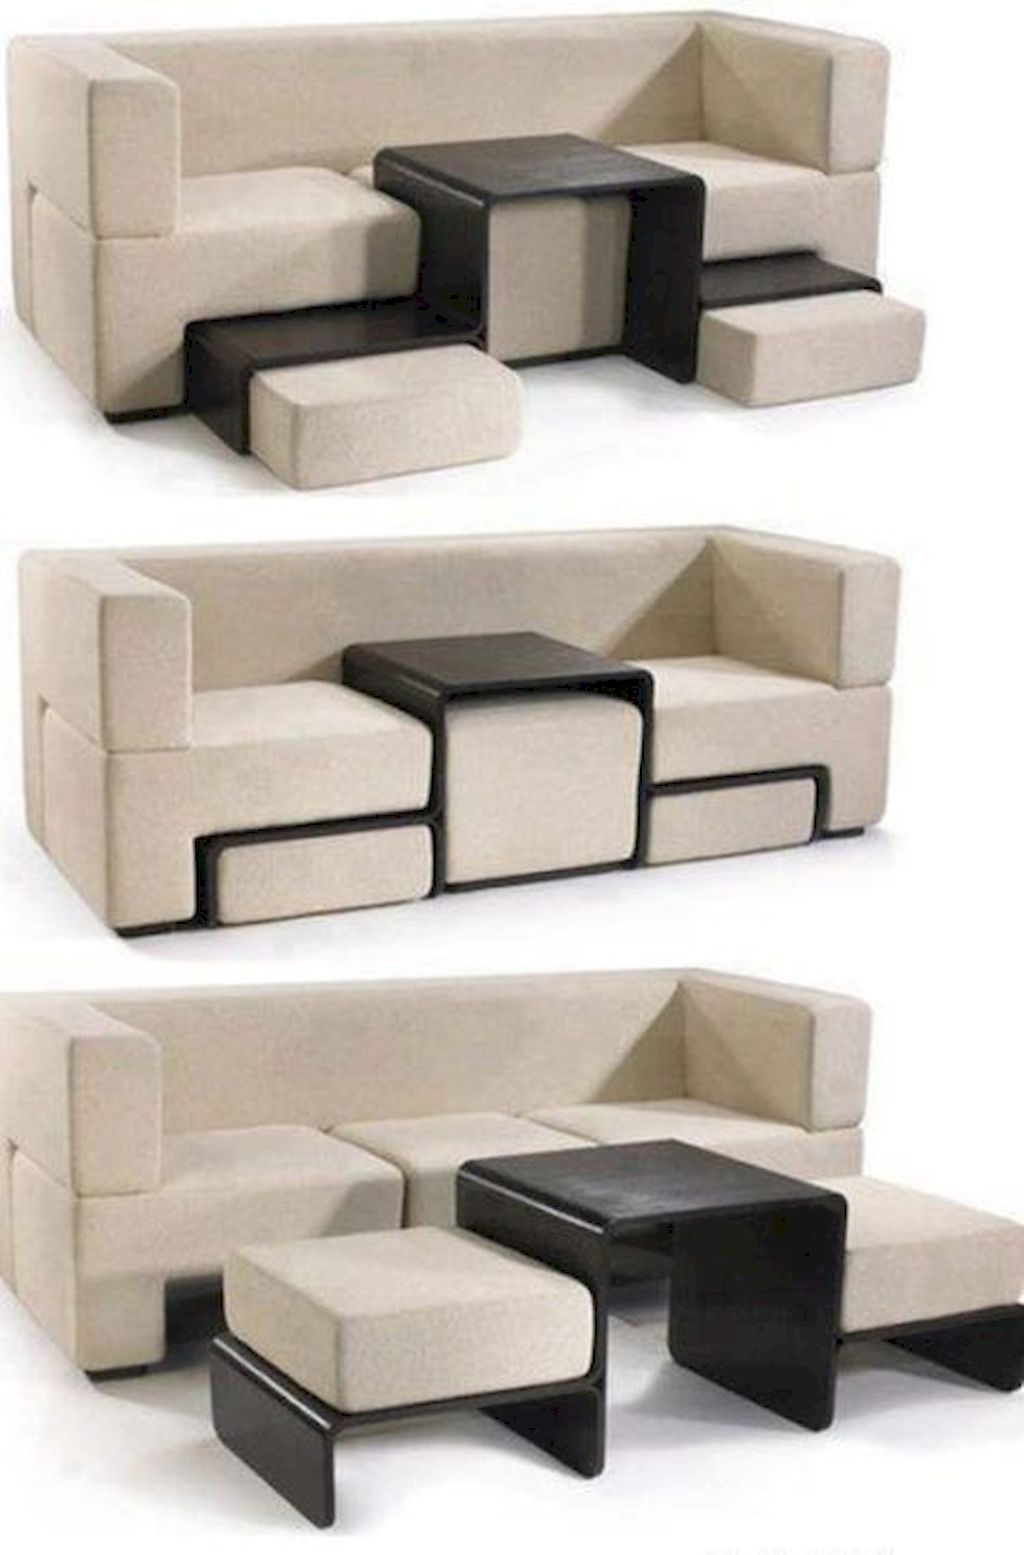 Modular sofas for small spaces